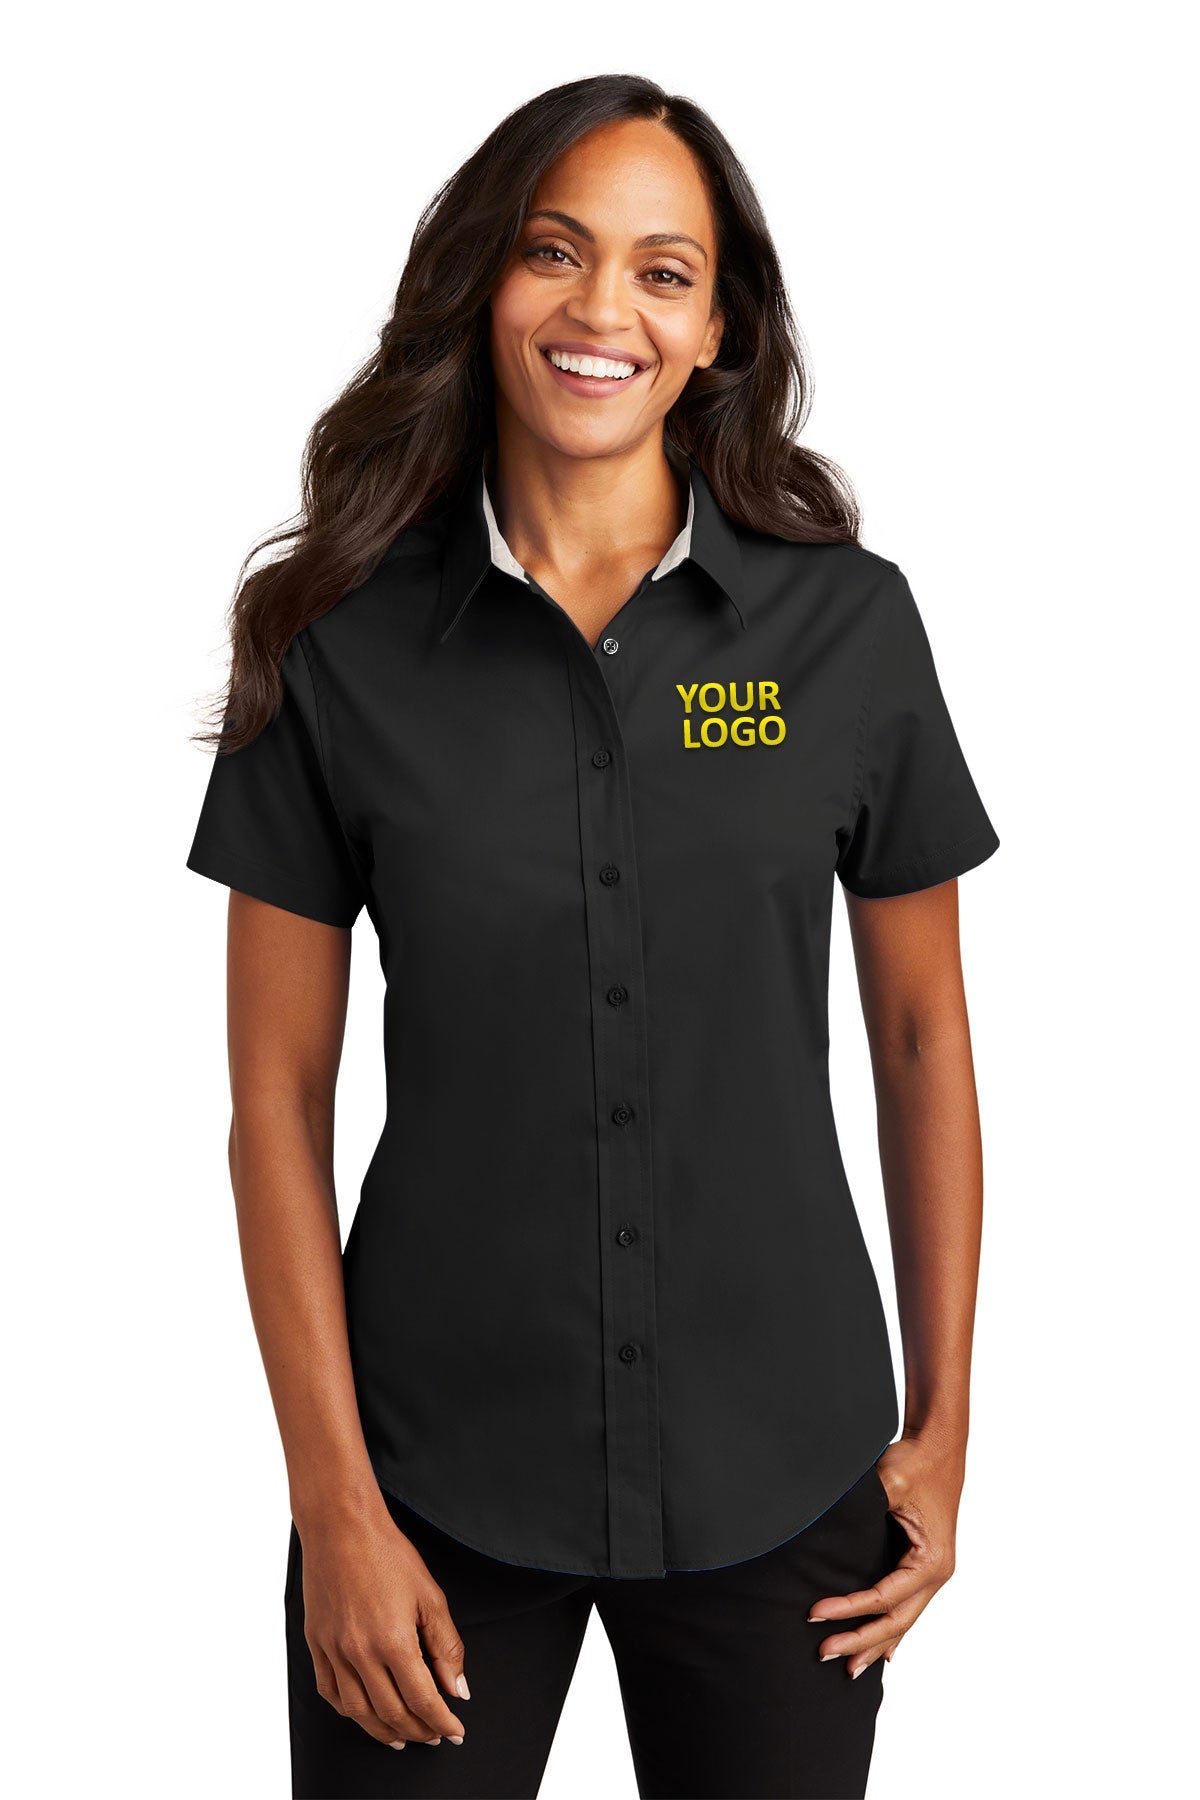 Port Authority Black/Light Stone L508 business shirts with company logo